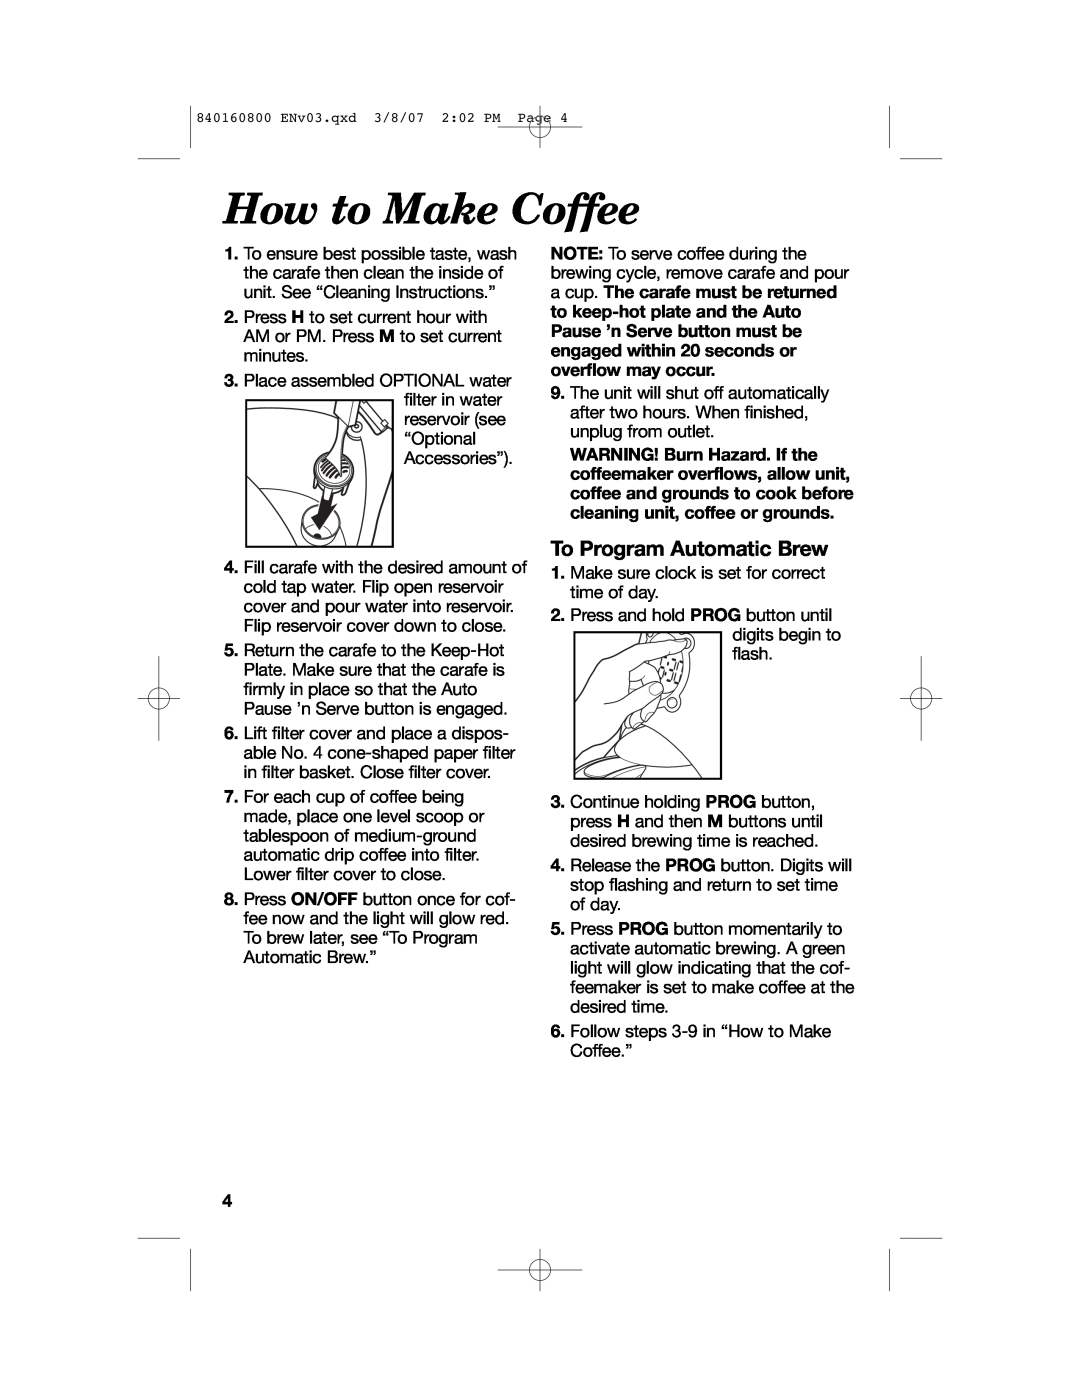 Hamilton Beach 840160800 manual How to Make Coffee, To Program Automatic Brew 